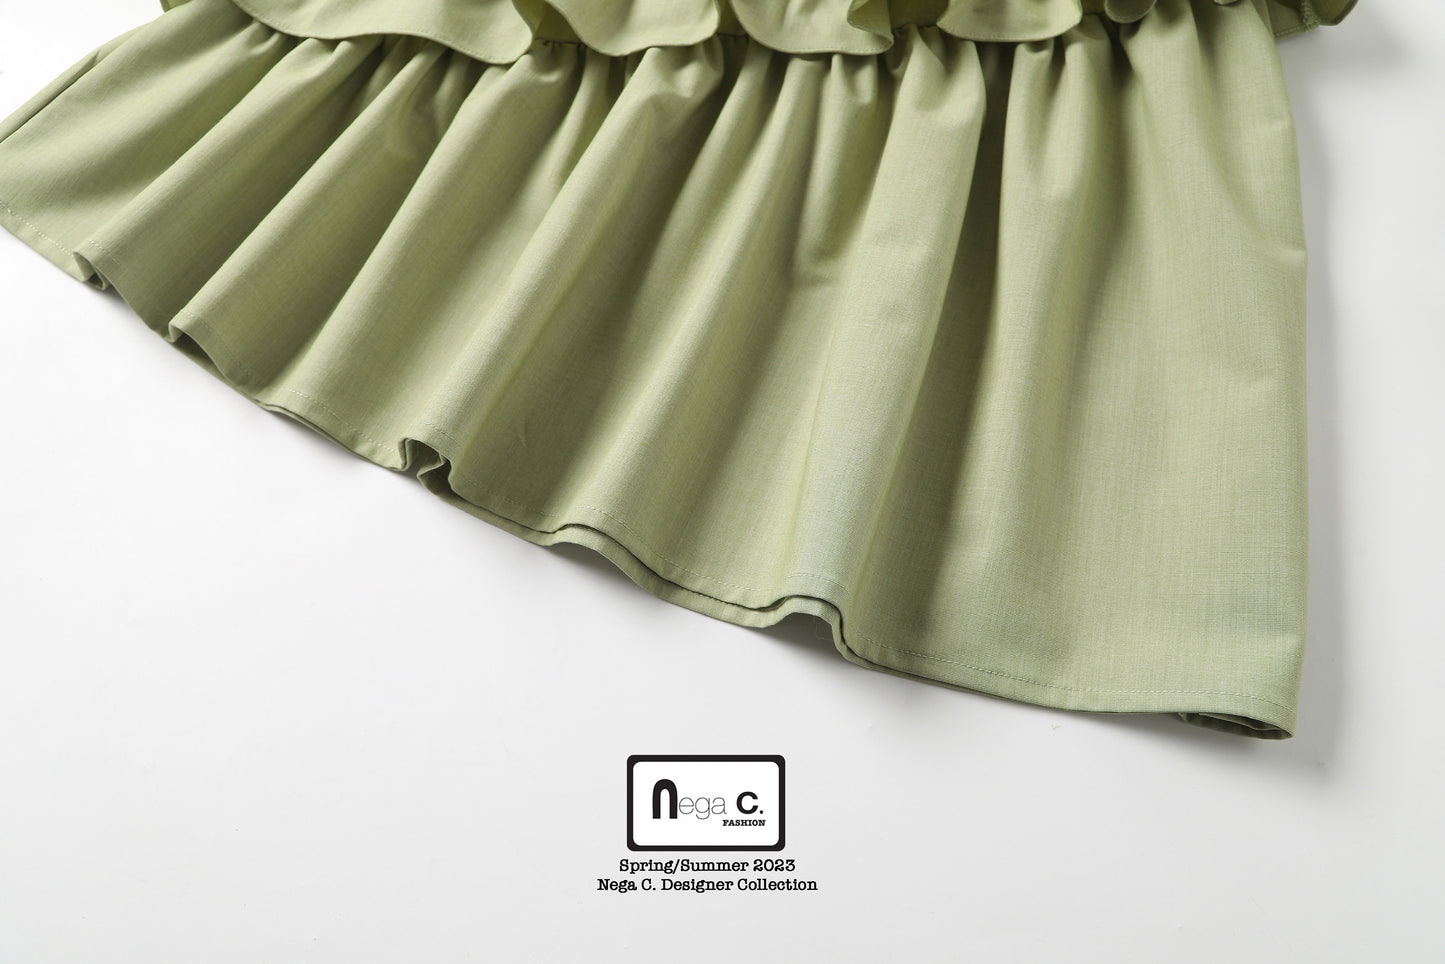 Nega C. Elegant Double-layered Ruffled Midi Skirt |Yellow | With lining